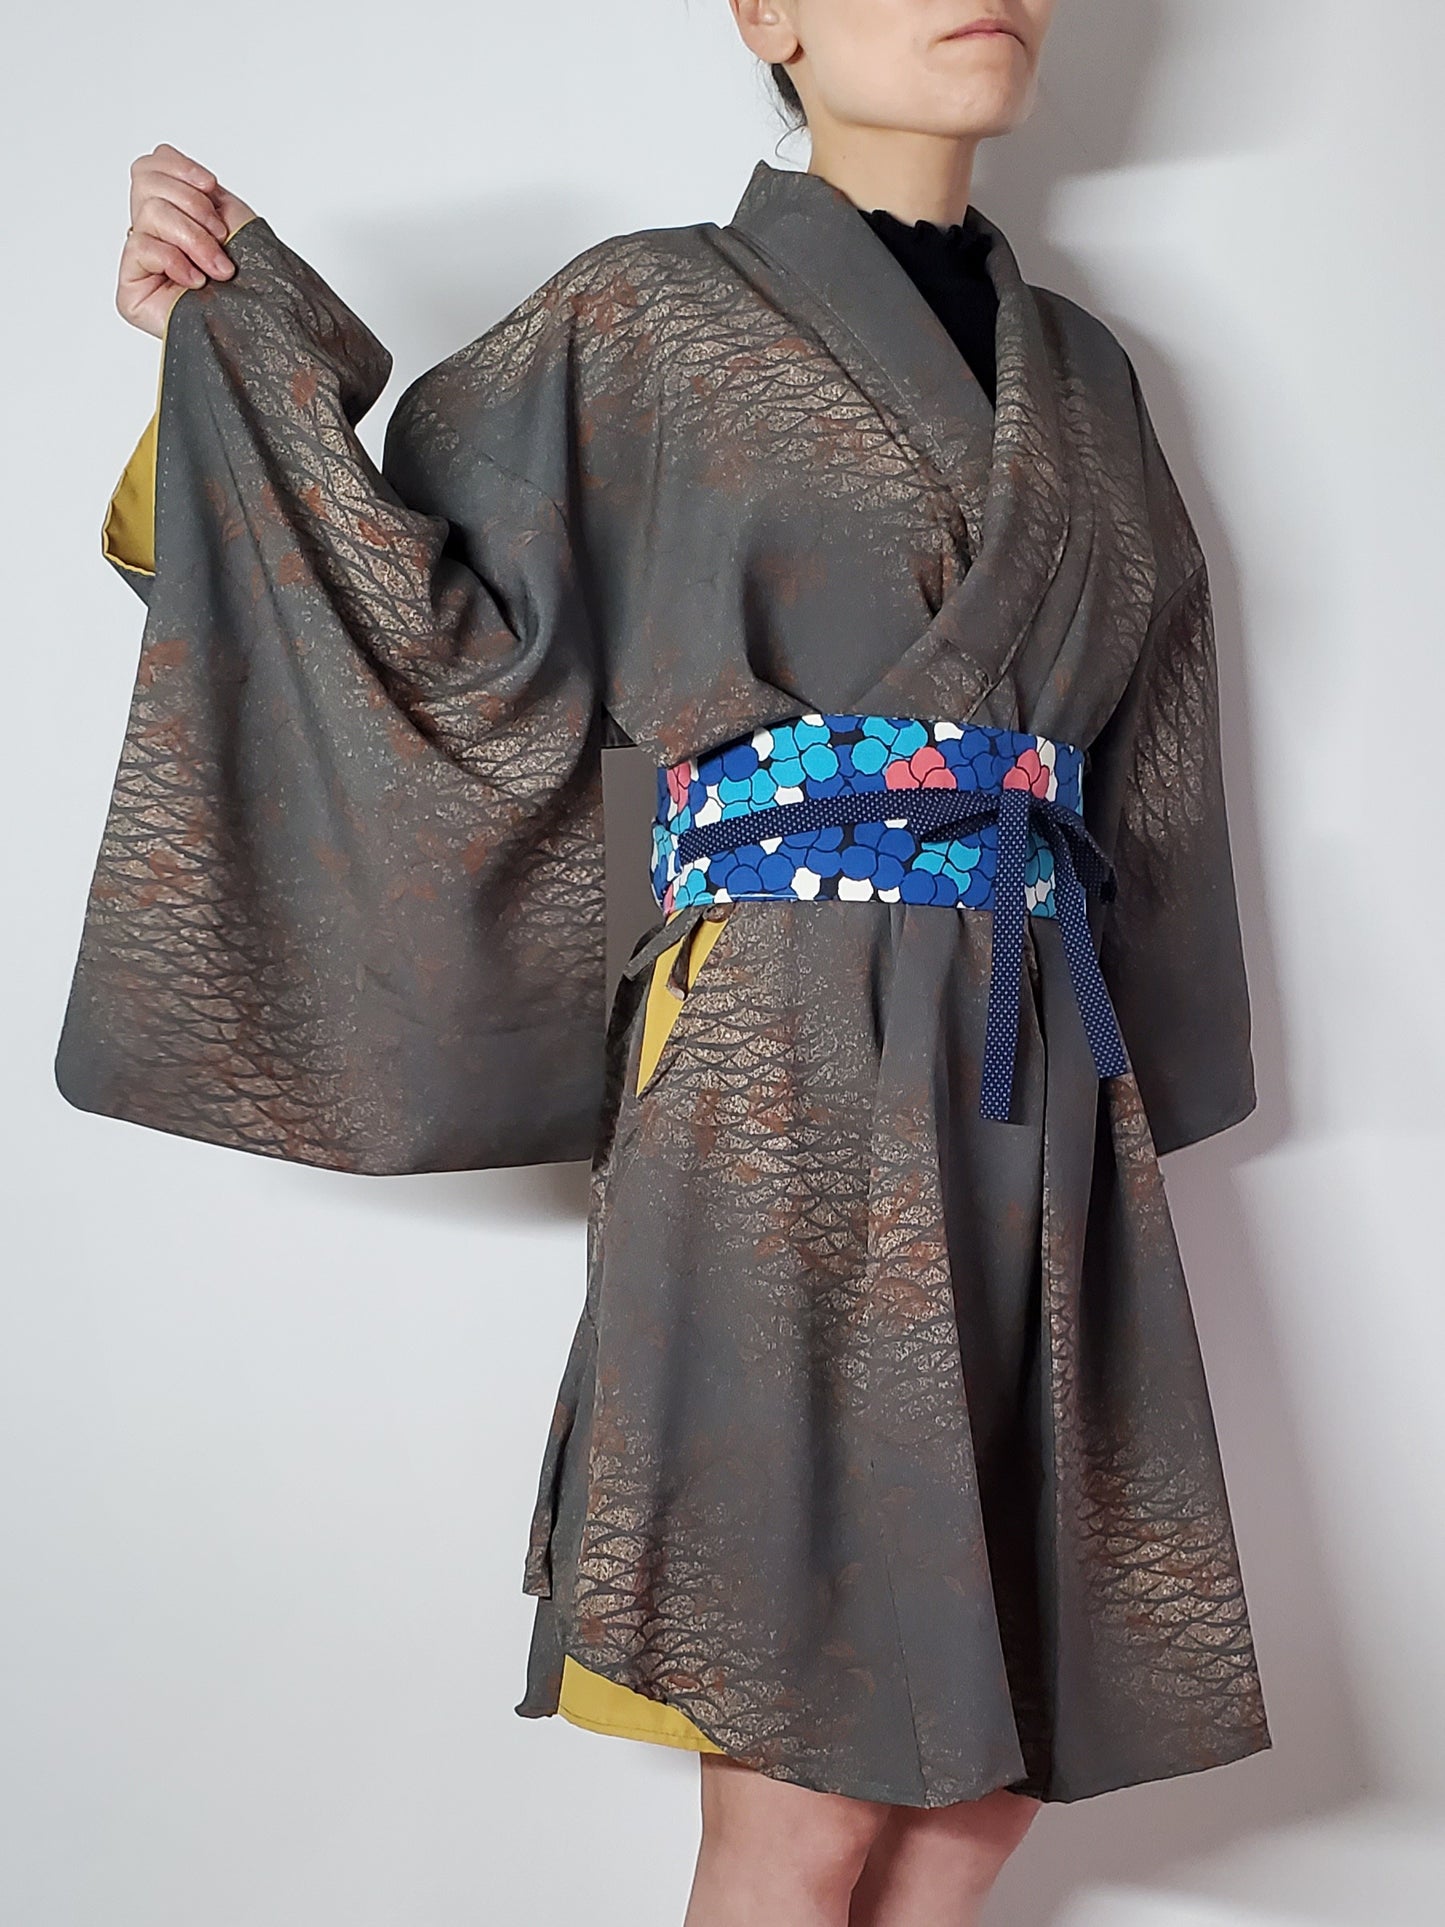 【Deep green/ Original Kimono dress】Japanese Vintage Kimono Haori, Japanese Hanten Jacket, Robe Dress, Japanese Floral pattern, Unisex